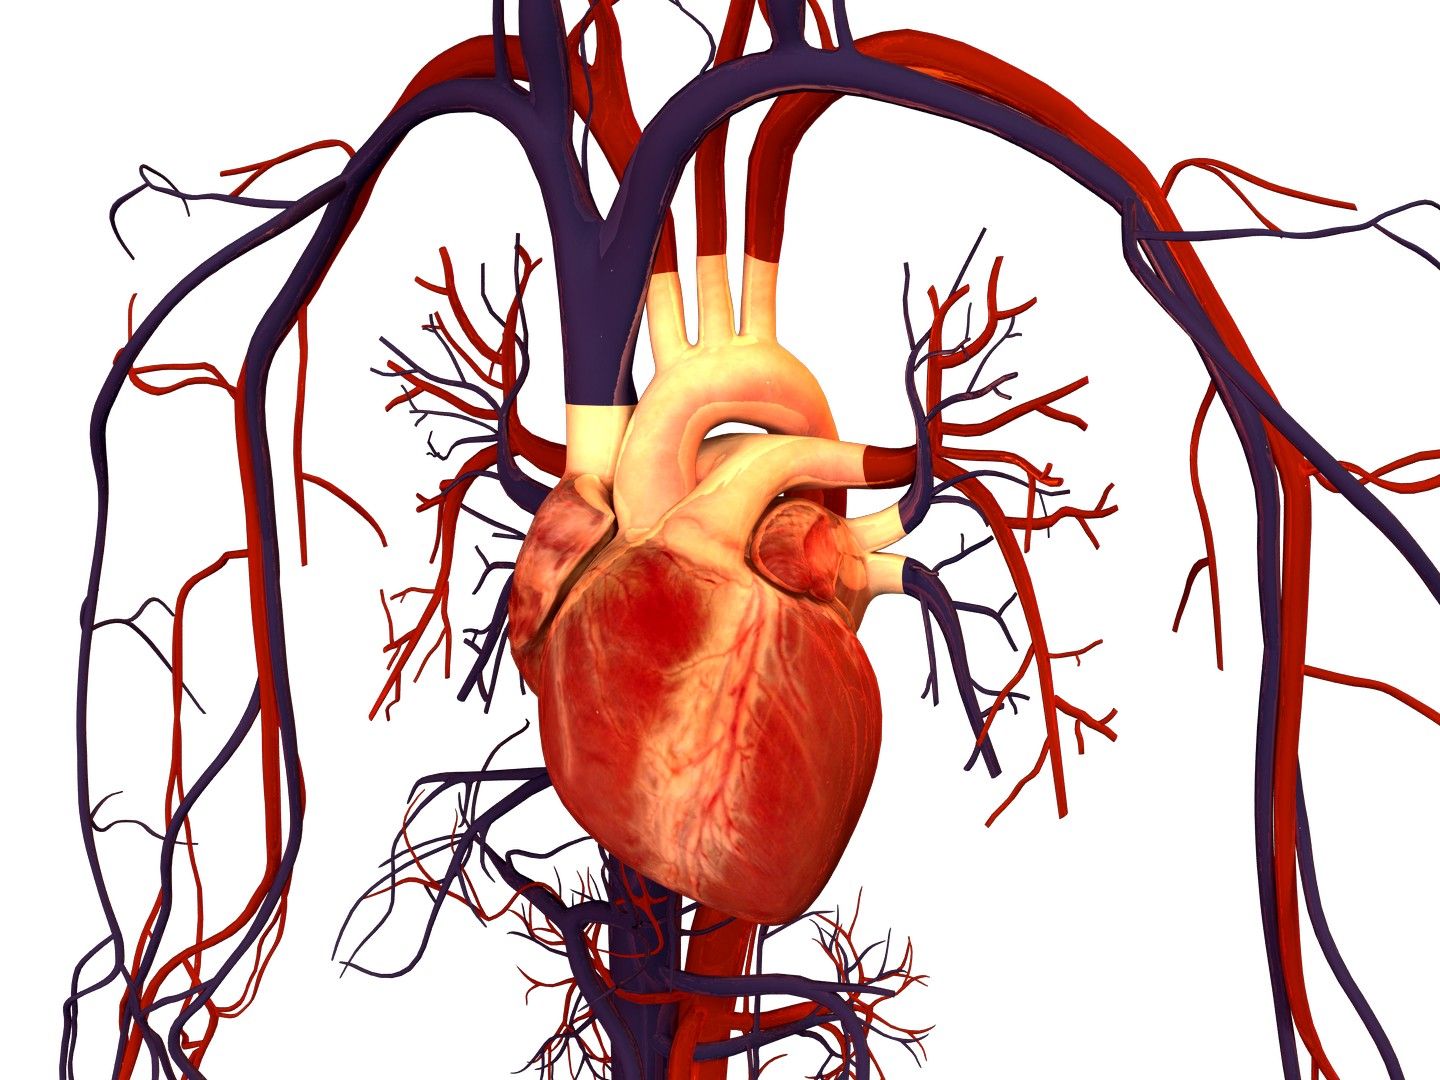 Human Heart and Circulatory System